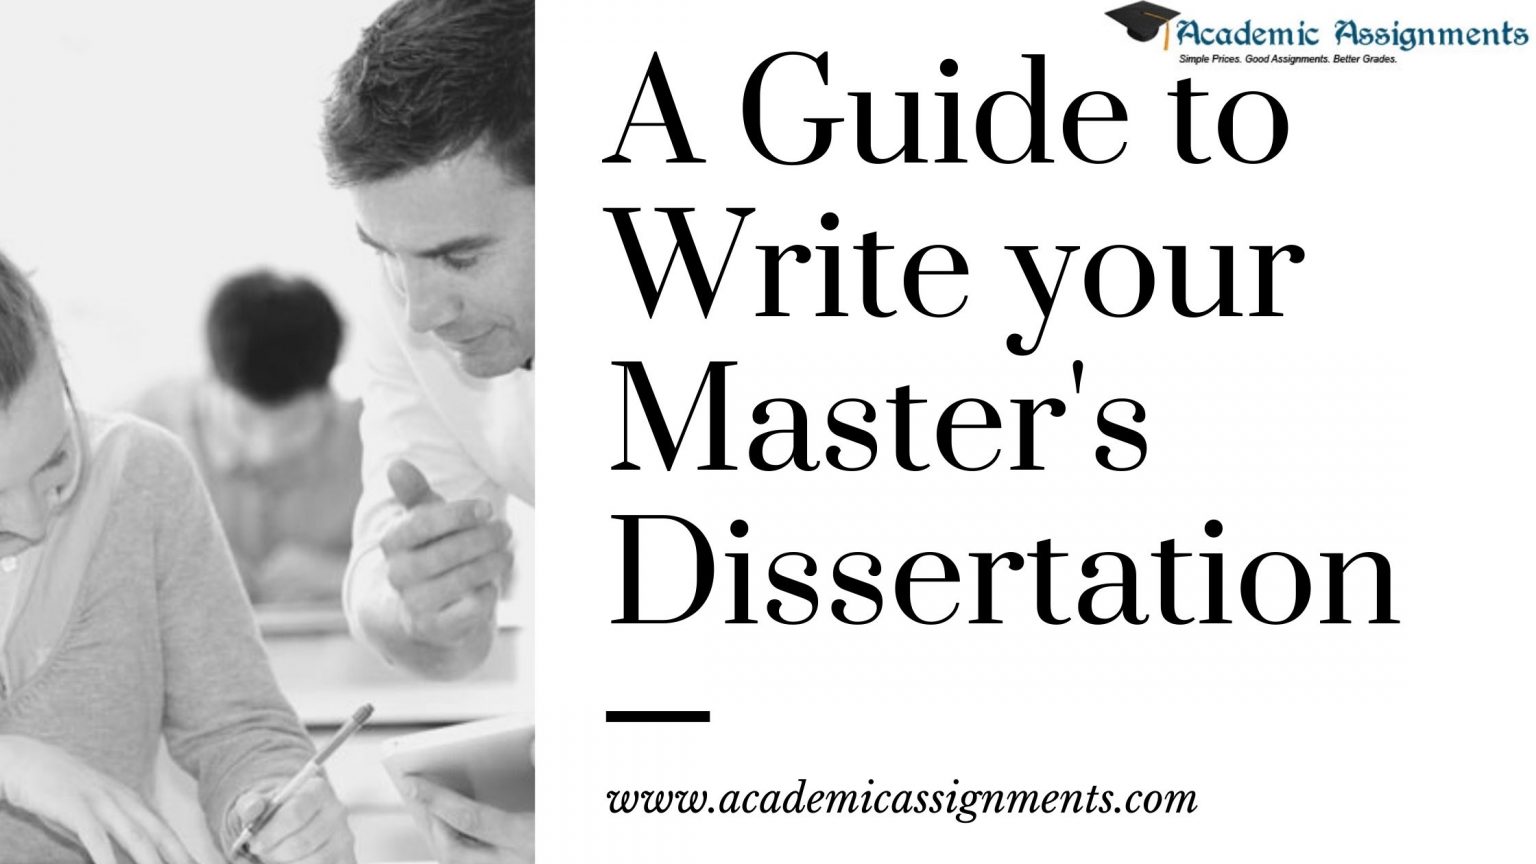 masters dissertation or master's dissertation